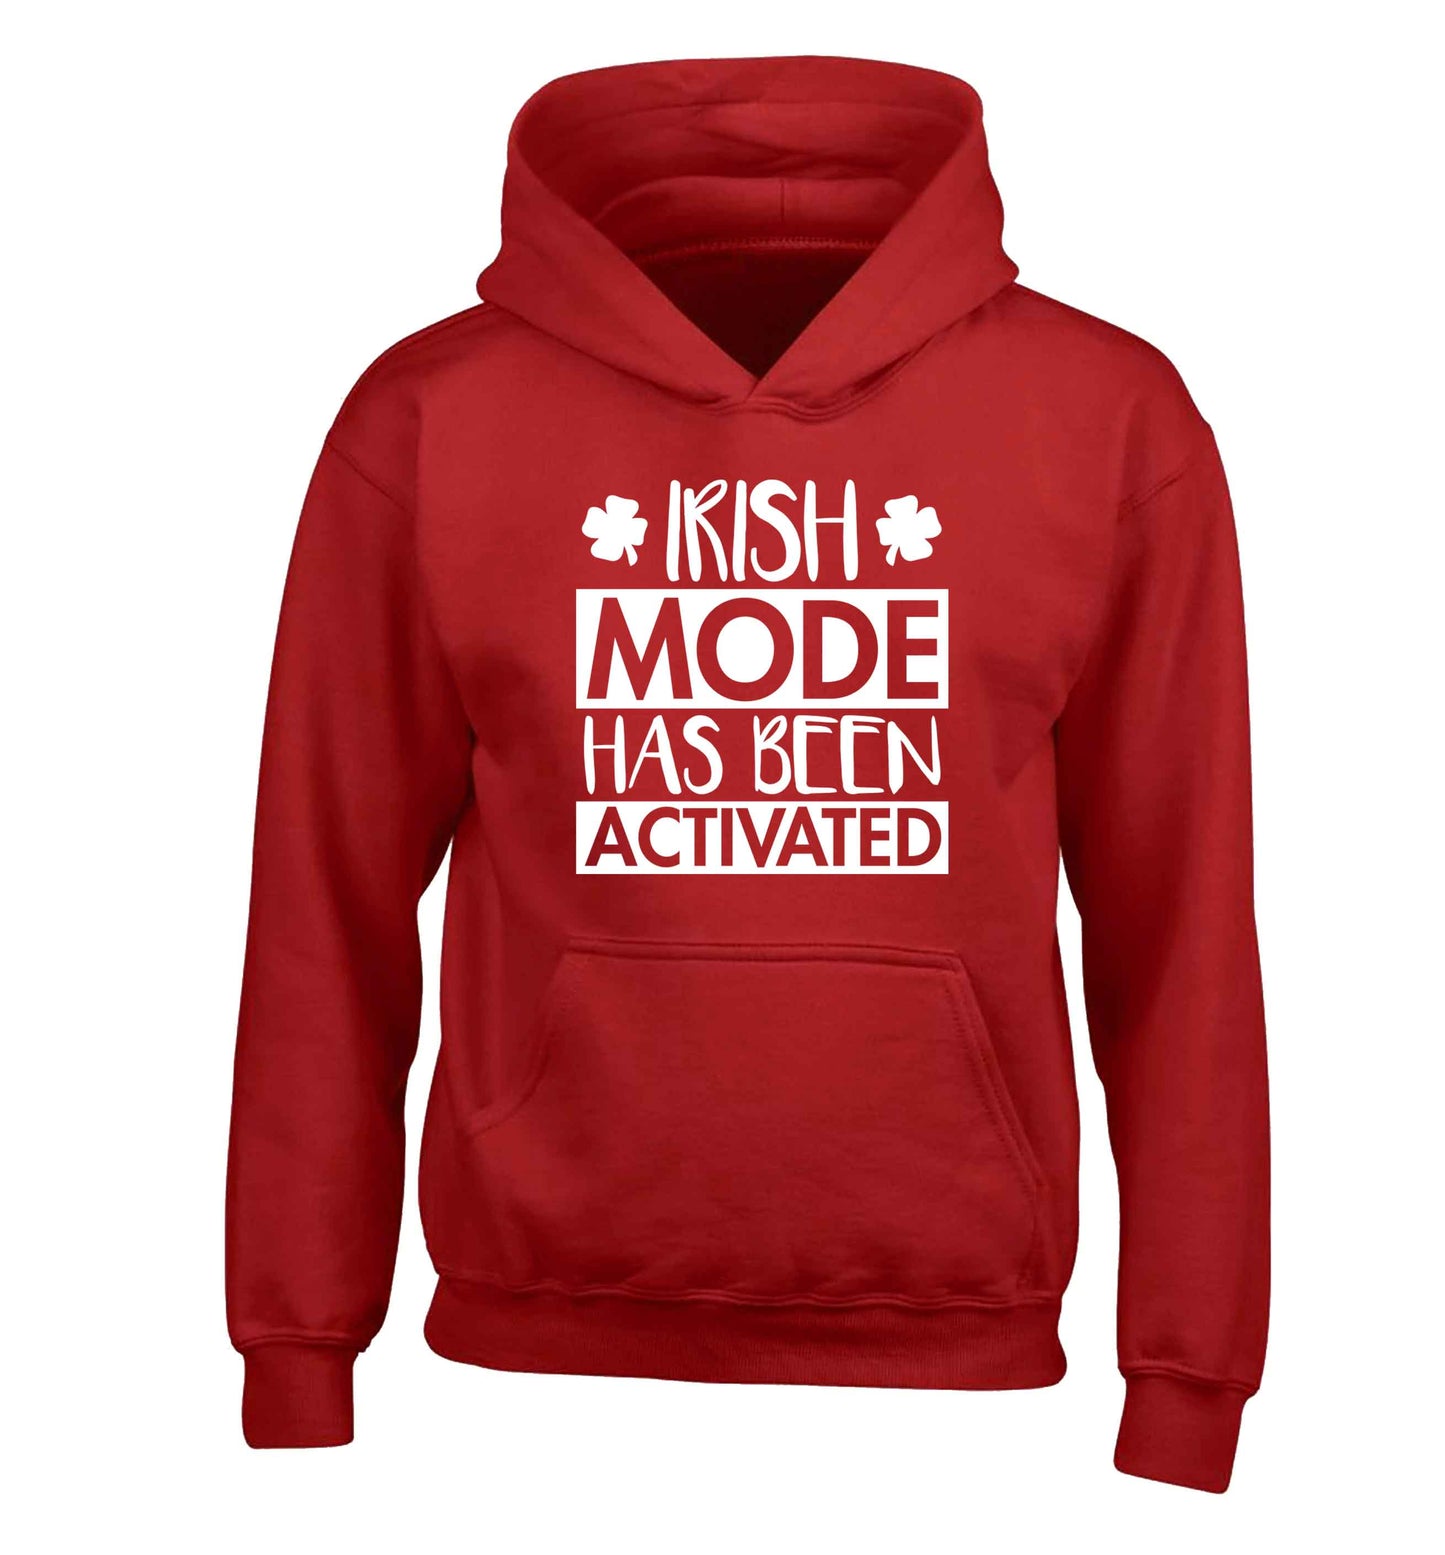 Irish mode has been activated children's red hoodie 12-13 Years